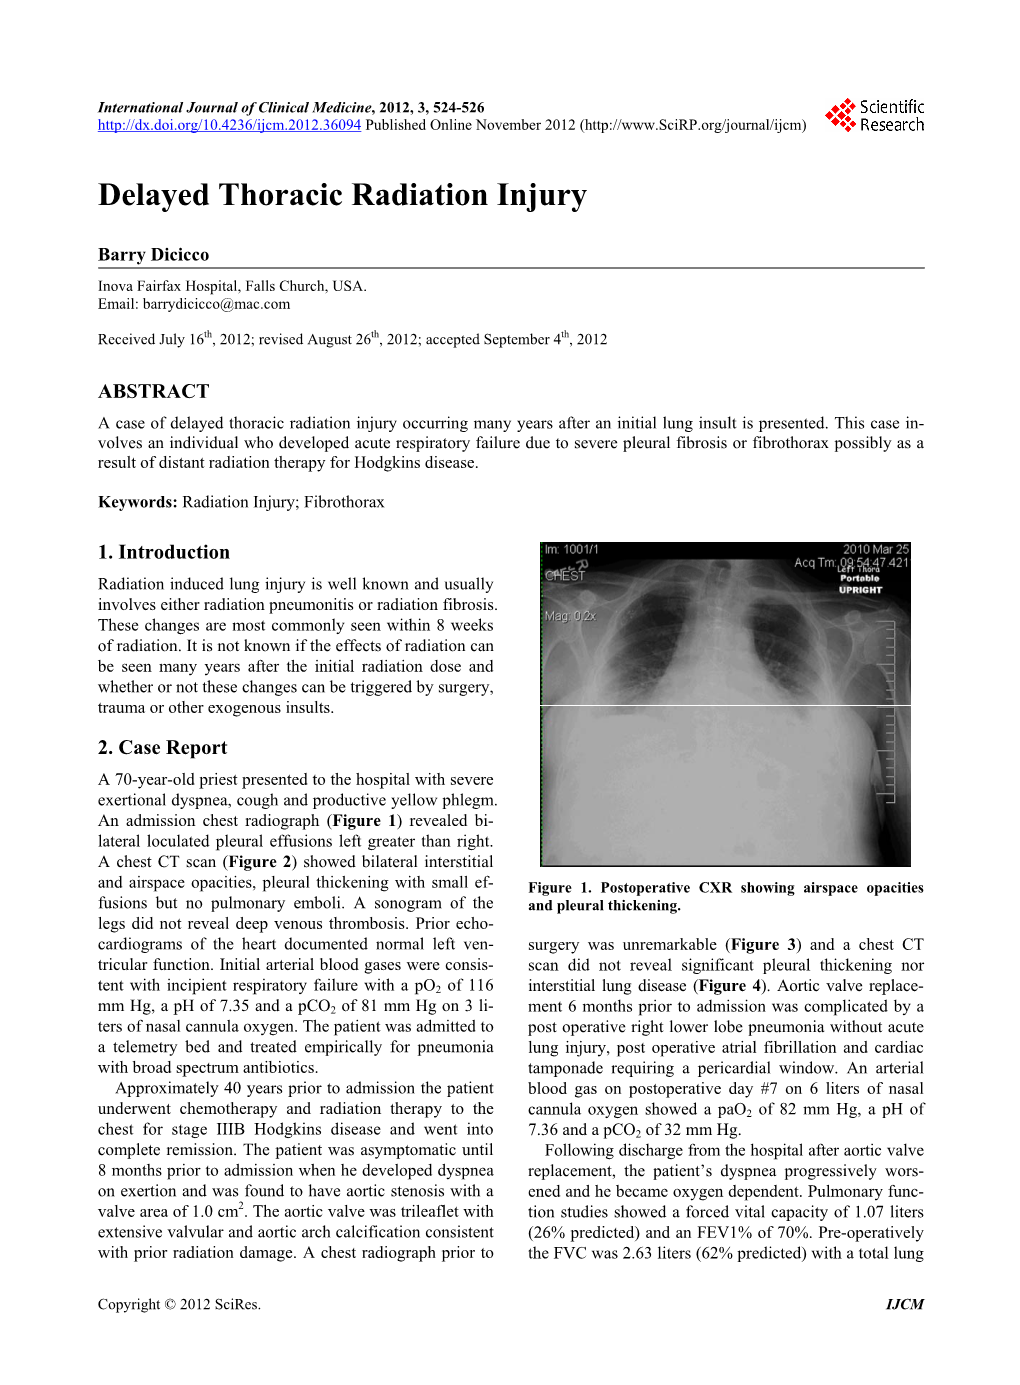 Delayed Thoracic Radiation Injury